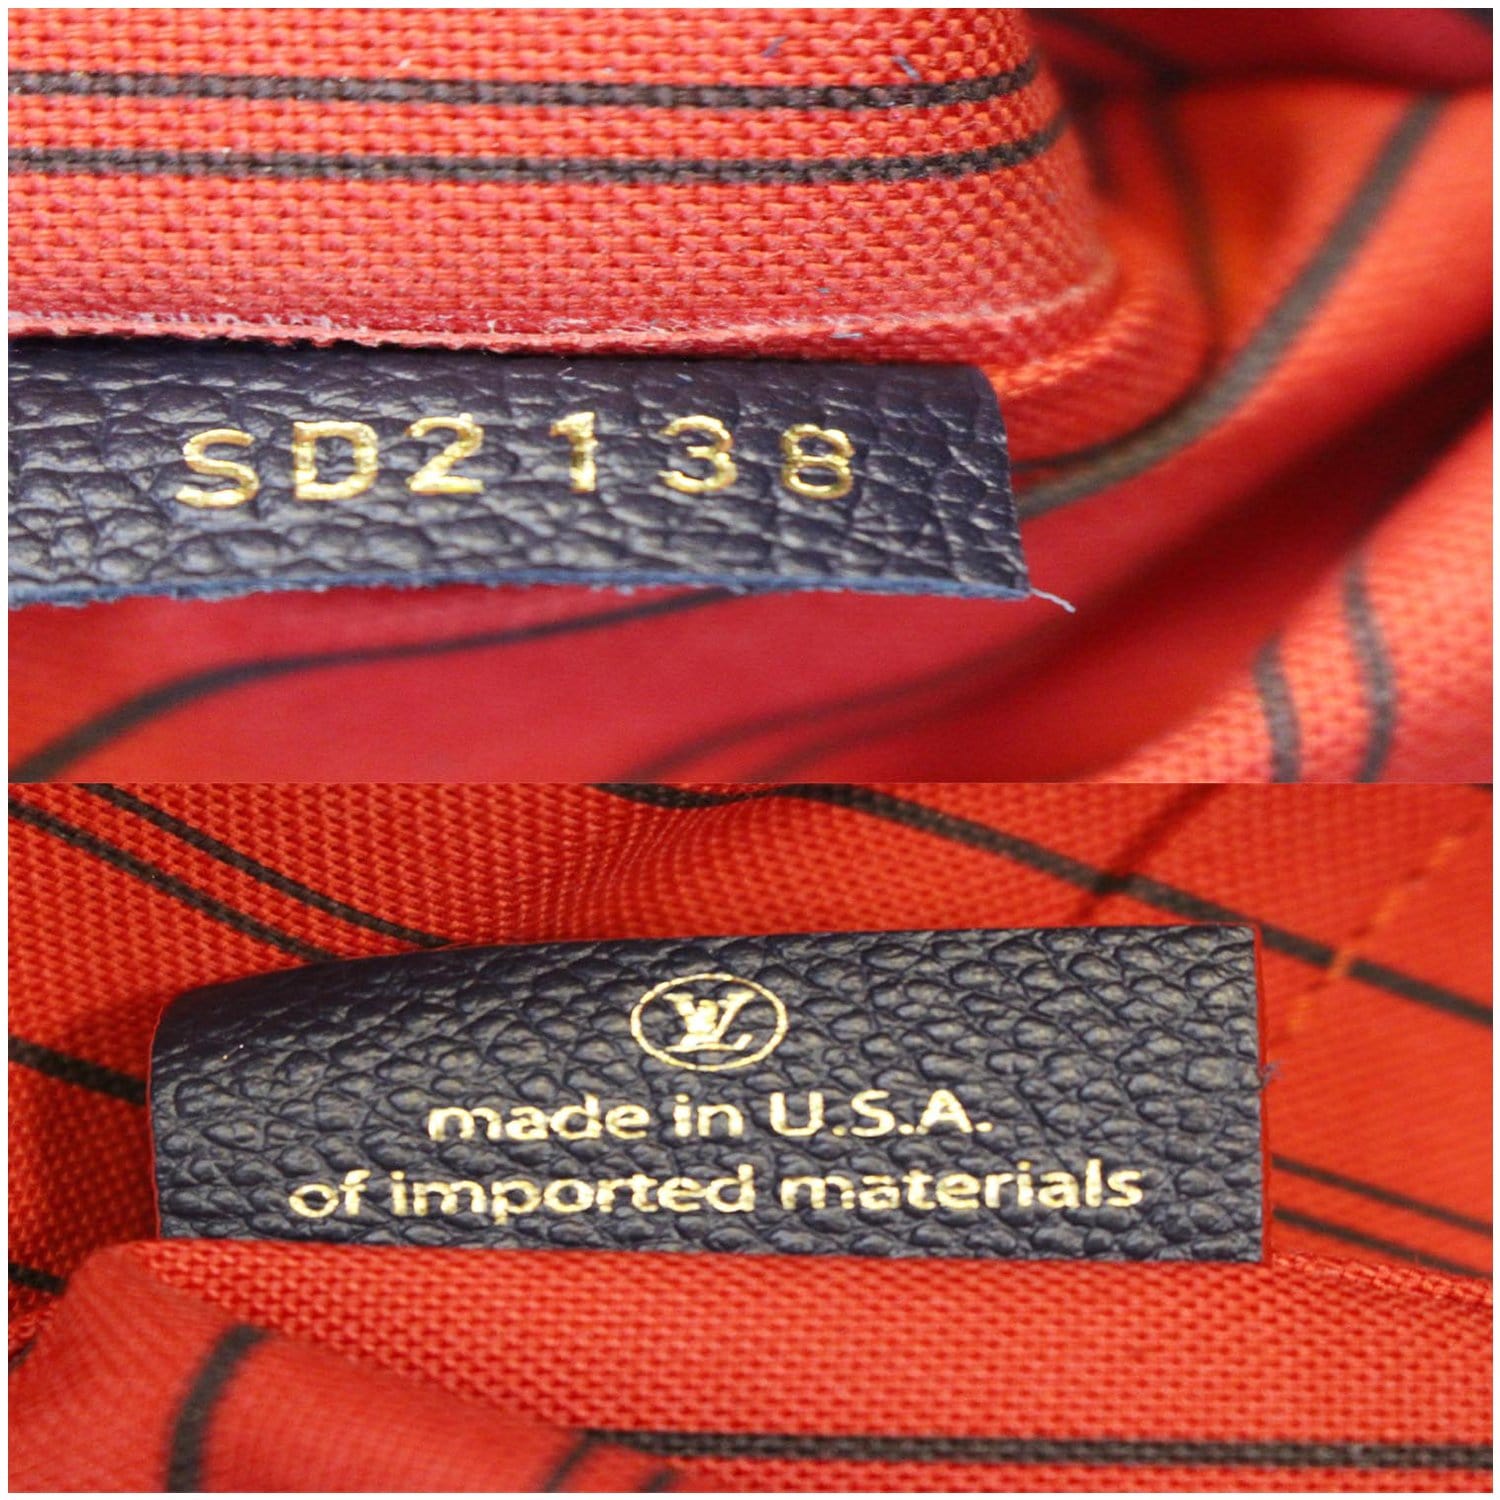 Louis Vuitton Marine & Rouge Monogram Empreinte Leather Melie